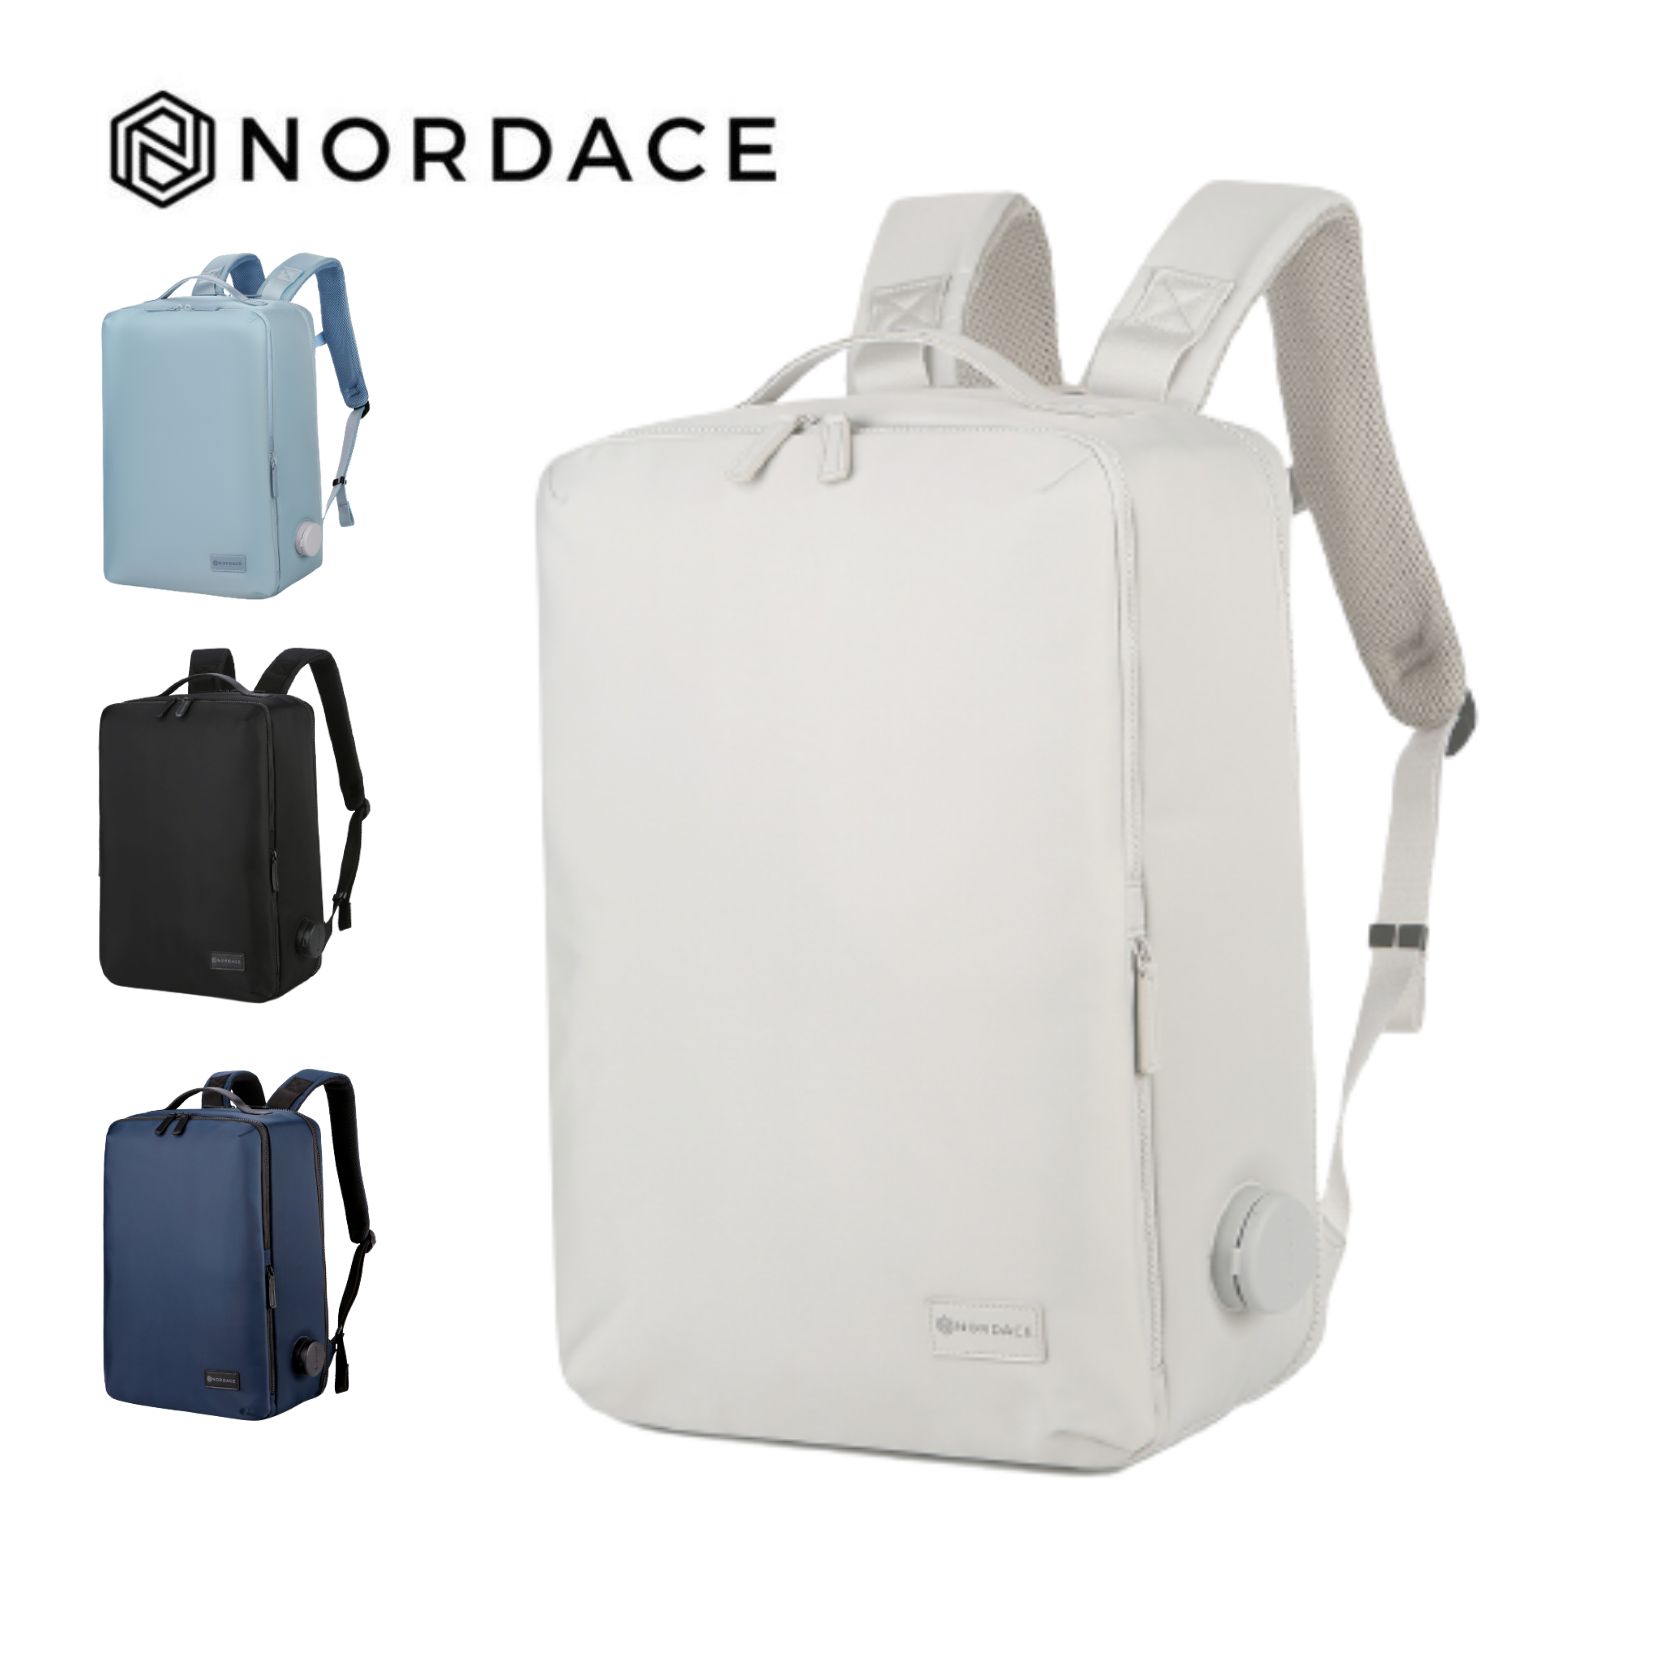 Nordace Laval- 後背包 斜背包 手提包 胸包 側背包 旅行包 工作包 四色任選 -灰色